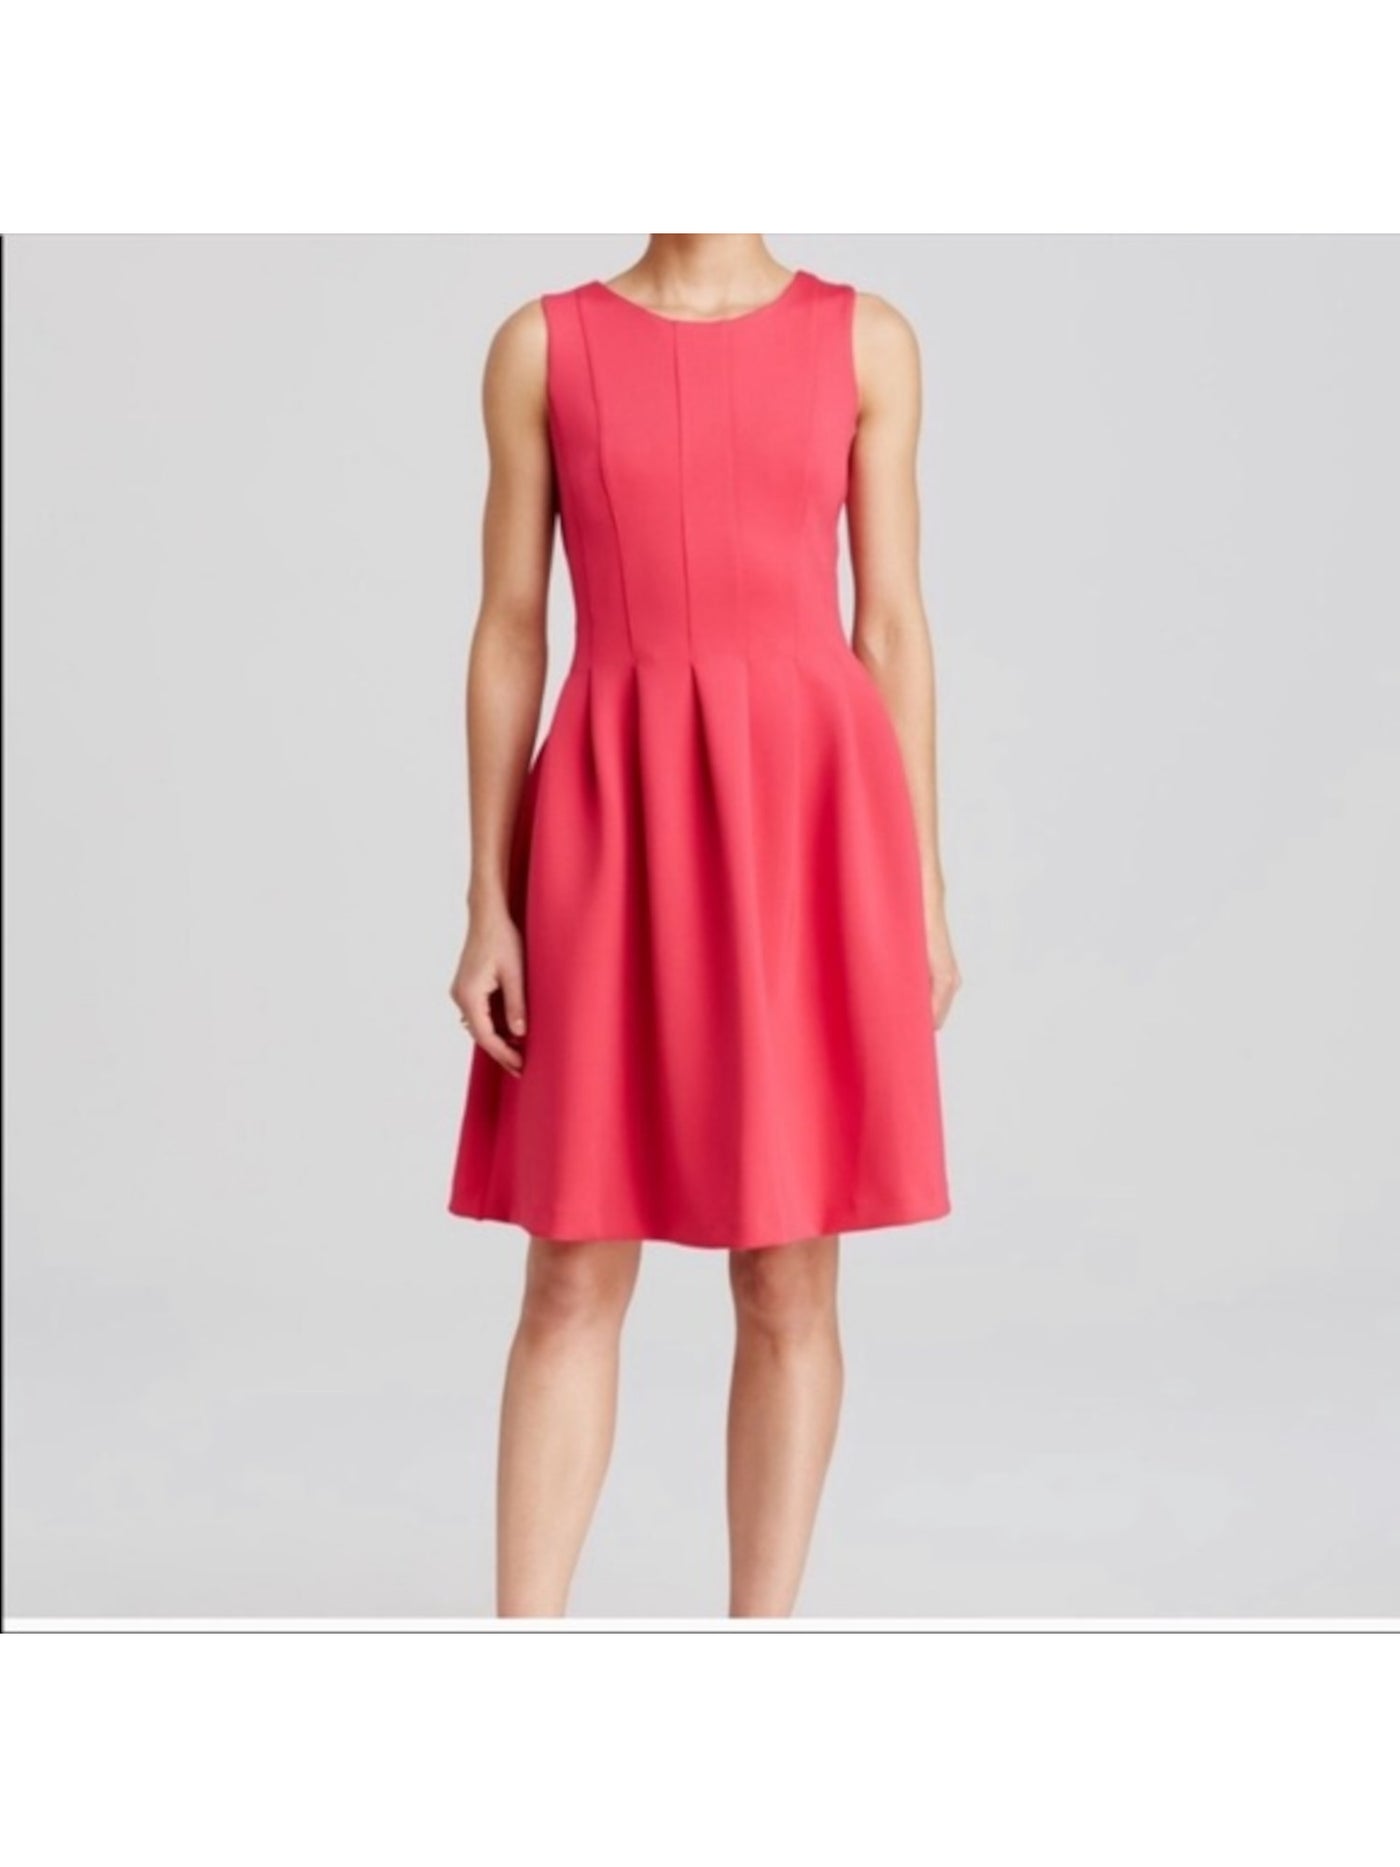 CALVIN KLEIN Womens Pink Stretch Pocketed Zippered Sleeveless Round Neck Short Evening Fit + Flare Dress 6